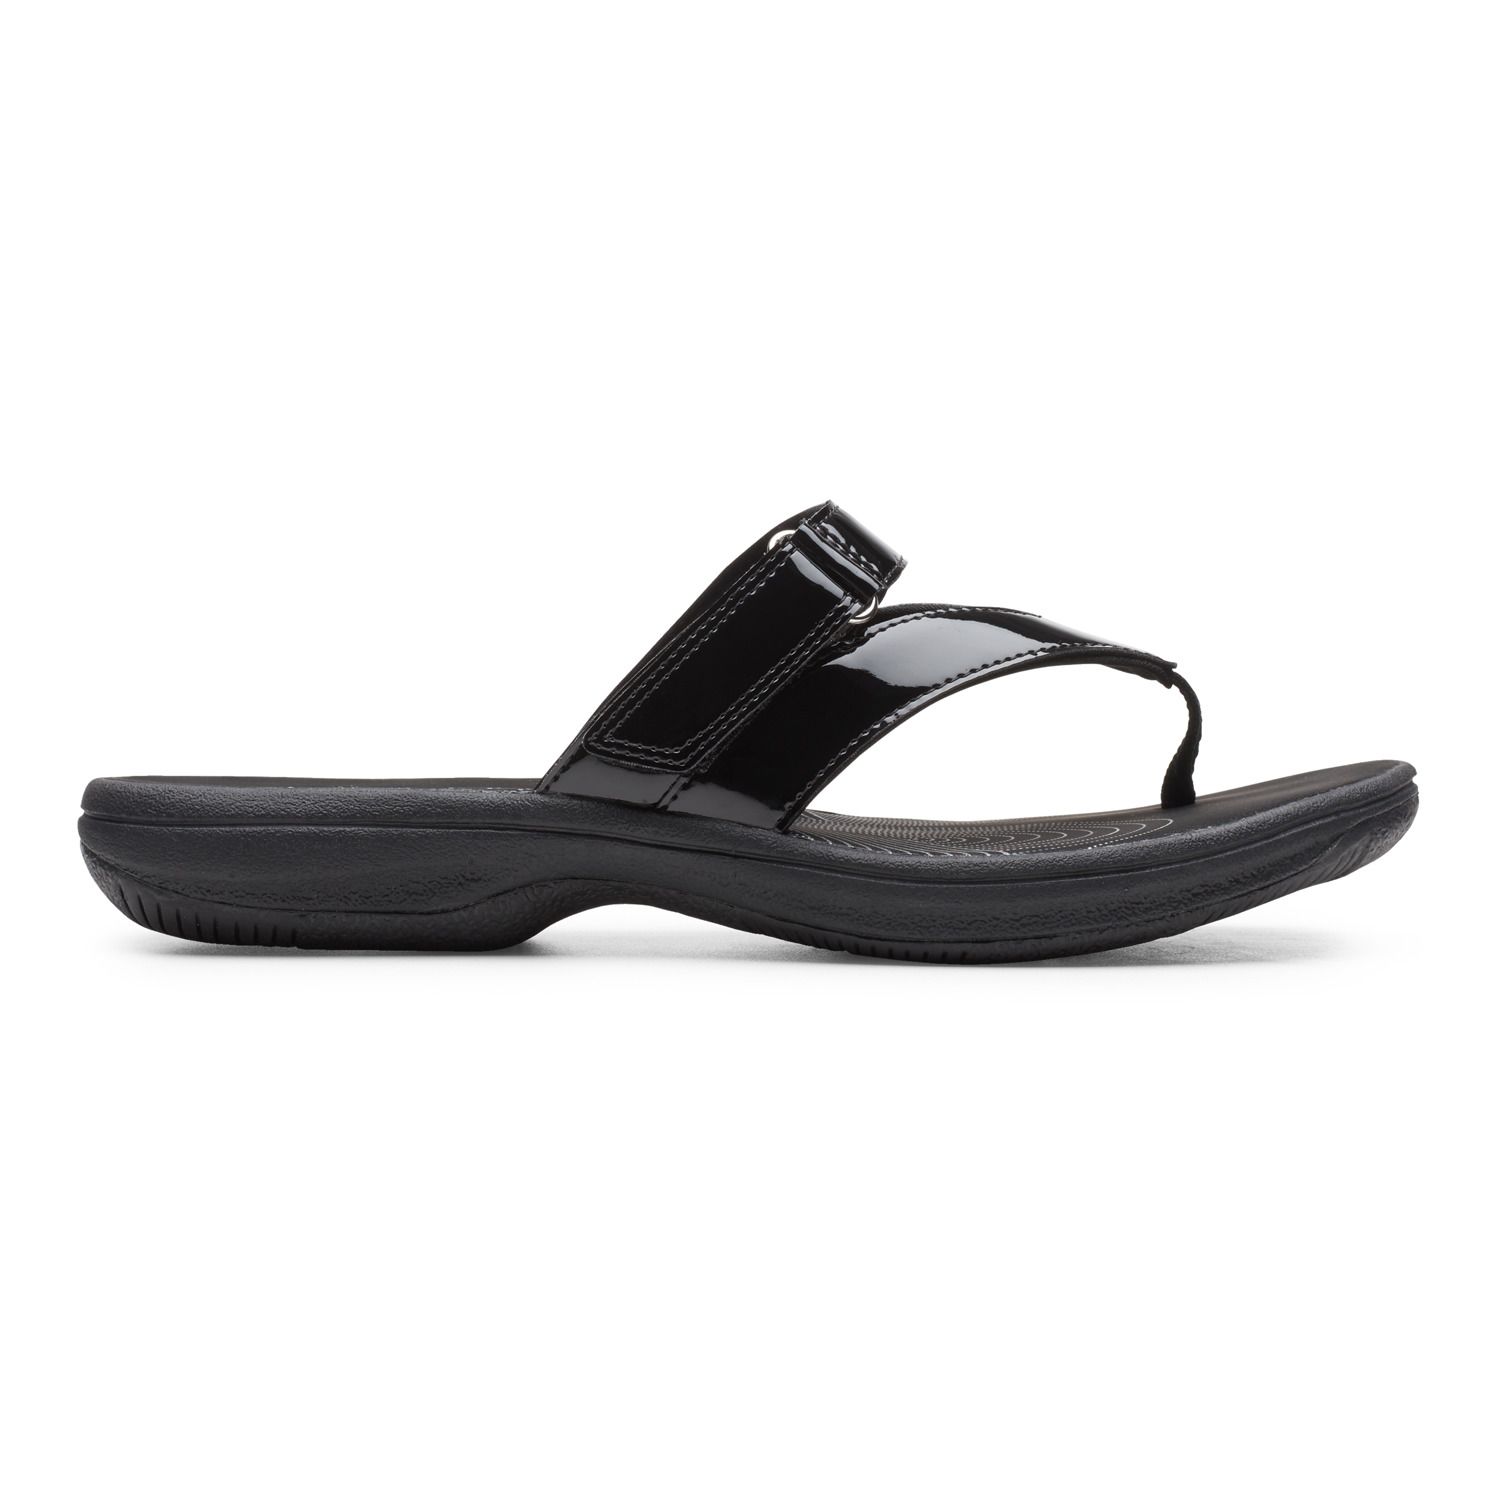 Clarks Flip Flops Sandals - Shoes | Kohl's